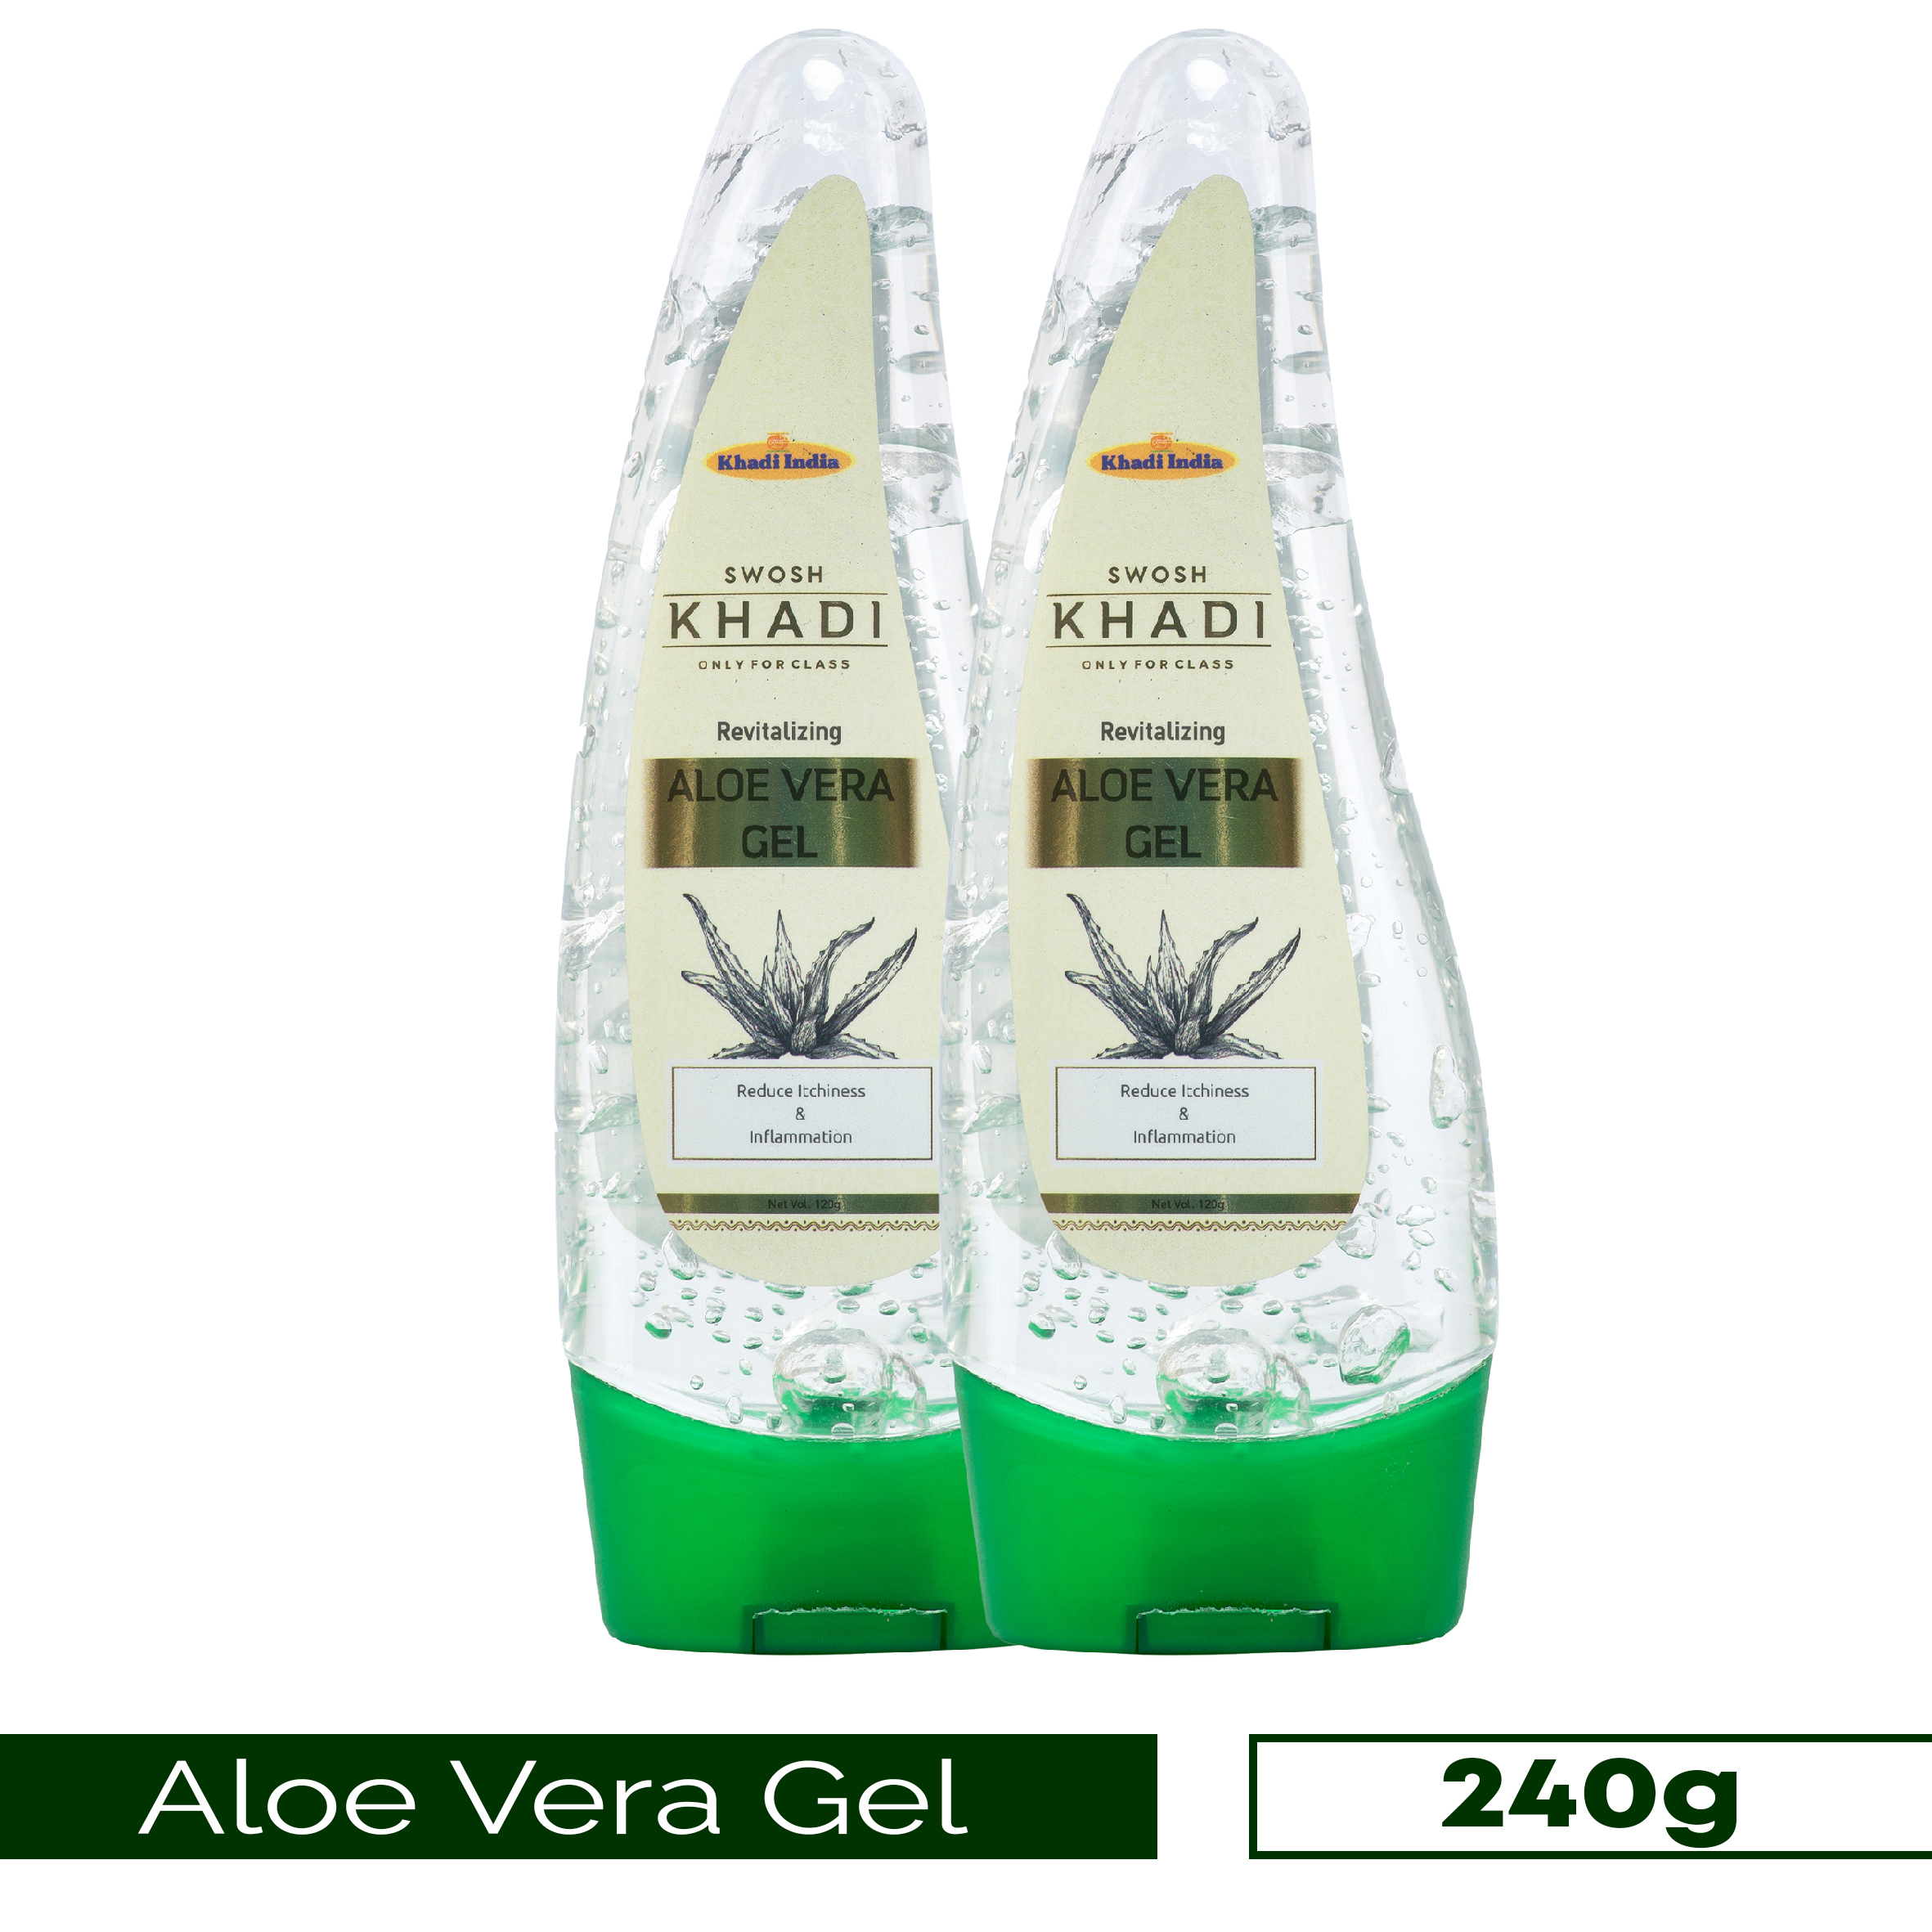 Aloe vera gel, 100% natural aloe vera gel